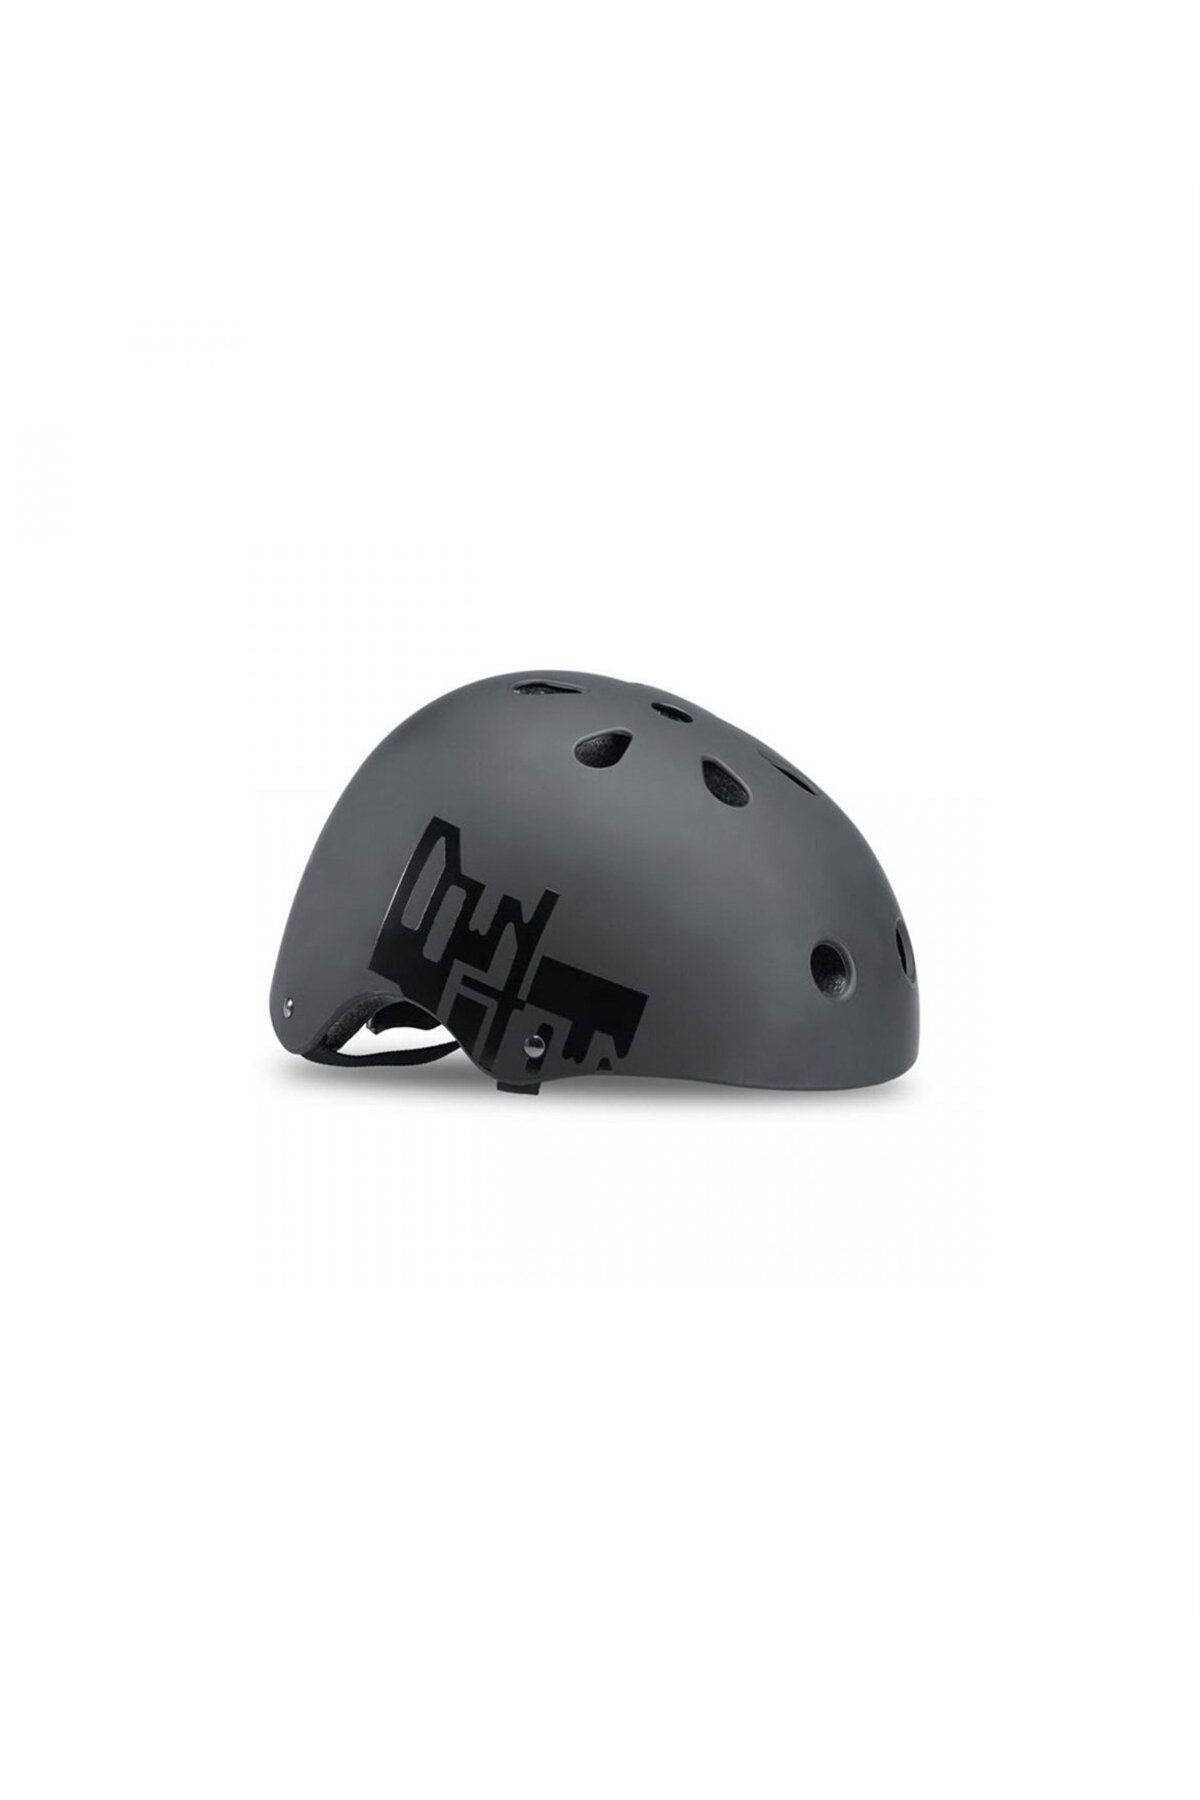 Rollerblade Dowtown Helmet